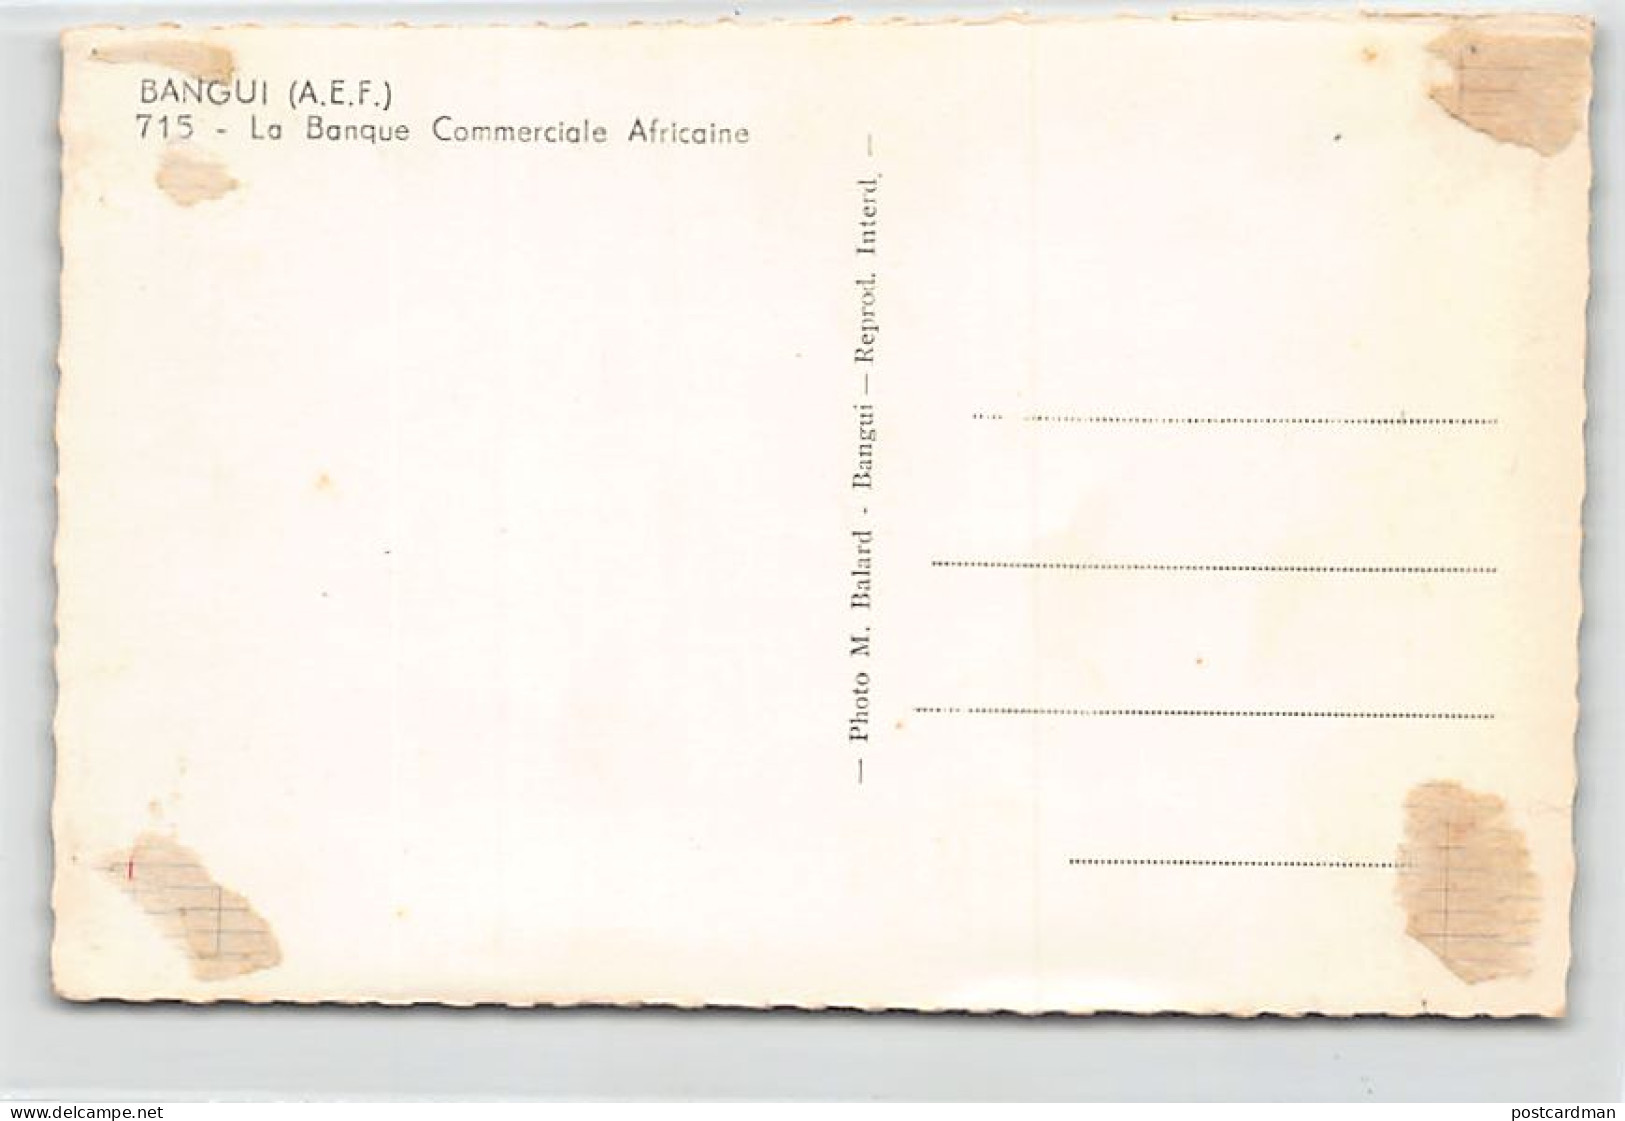 Centrafrique - BANGUI - La Banque Commerciale Africaine - Ed. M. Balard 715 - República Centroafricana